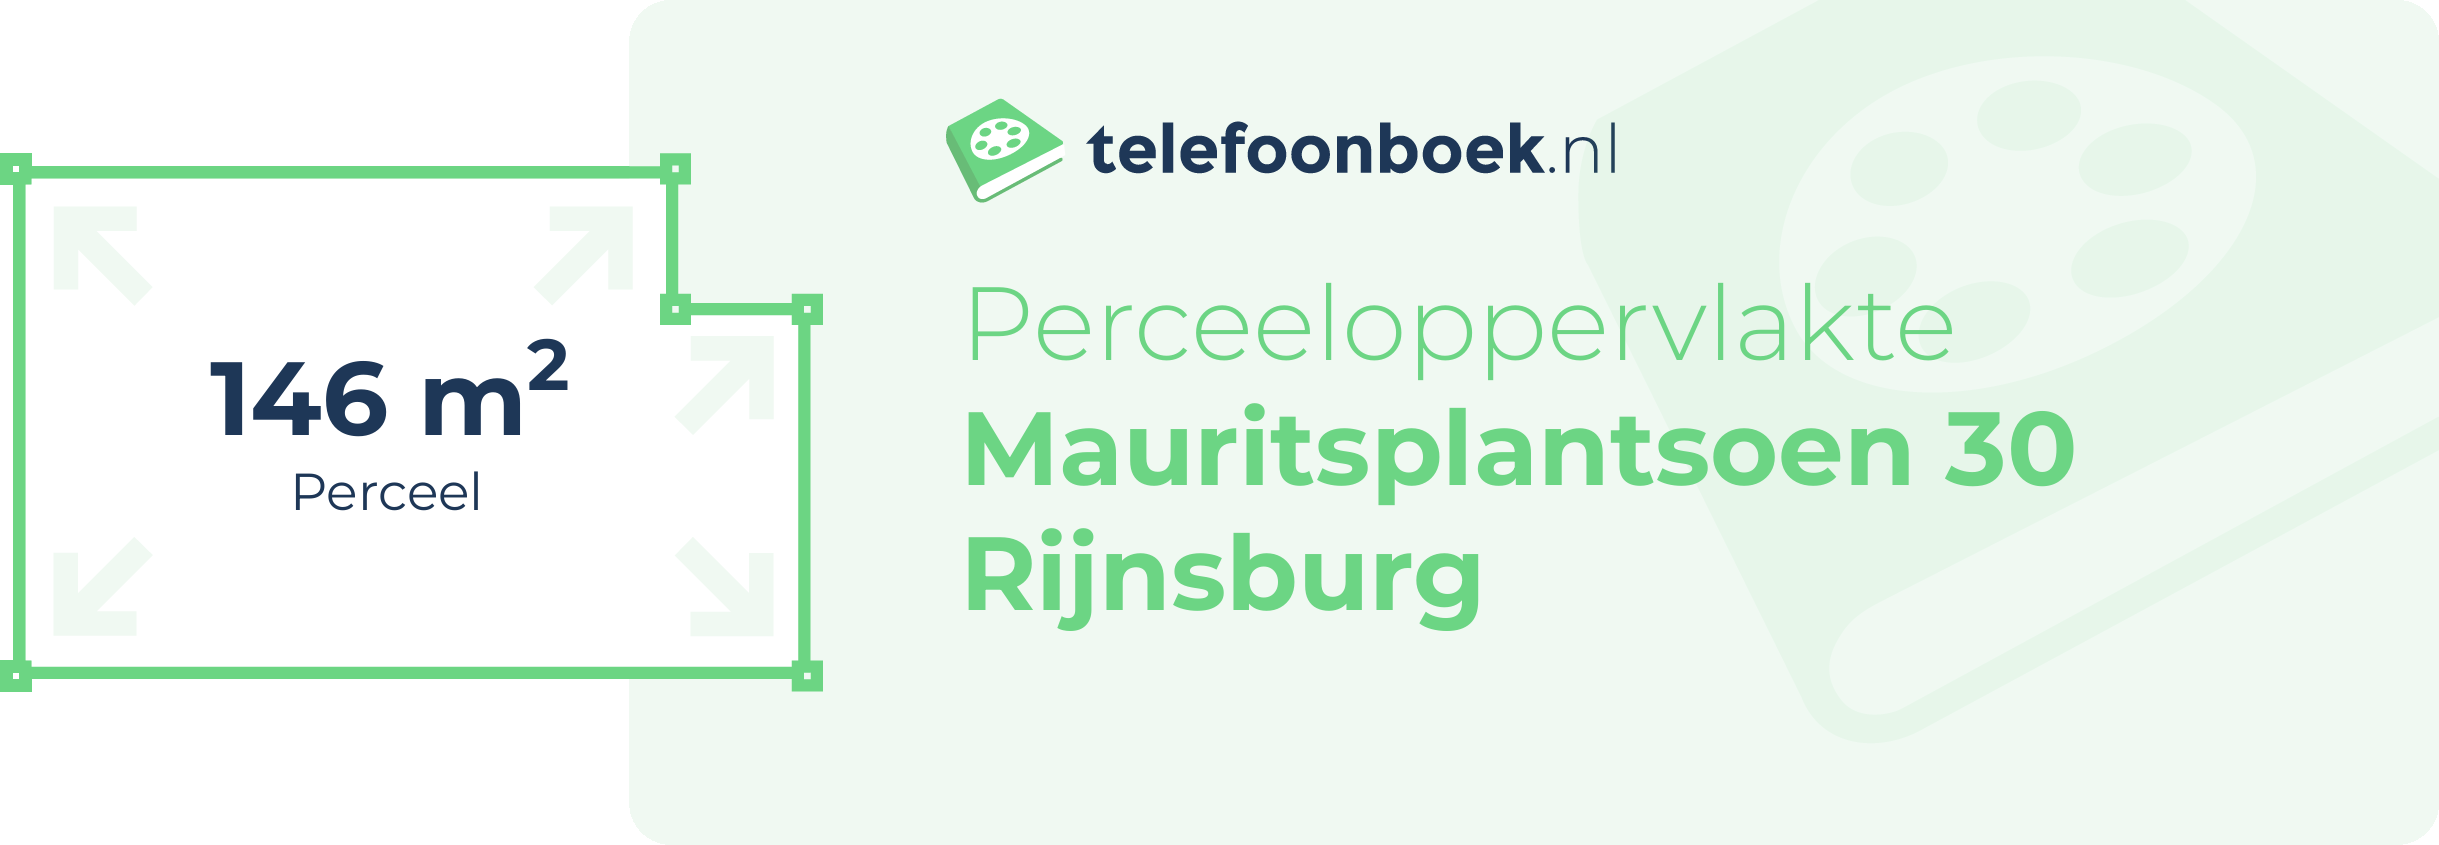 Perceeloppervlakte Mauritsplantsoen 30 Rijnsburg